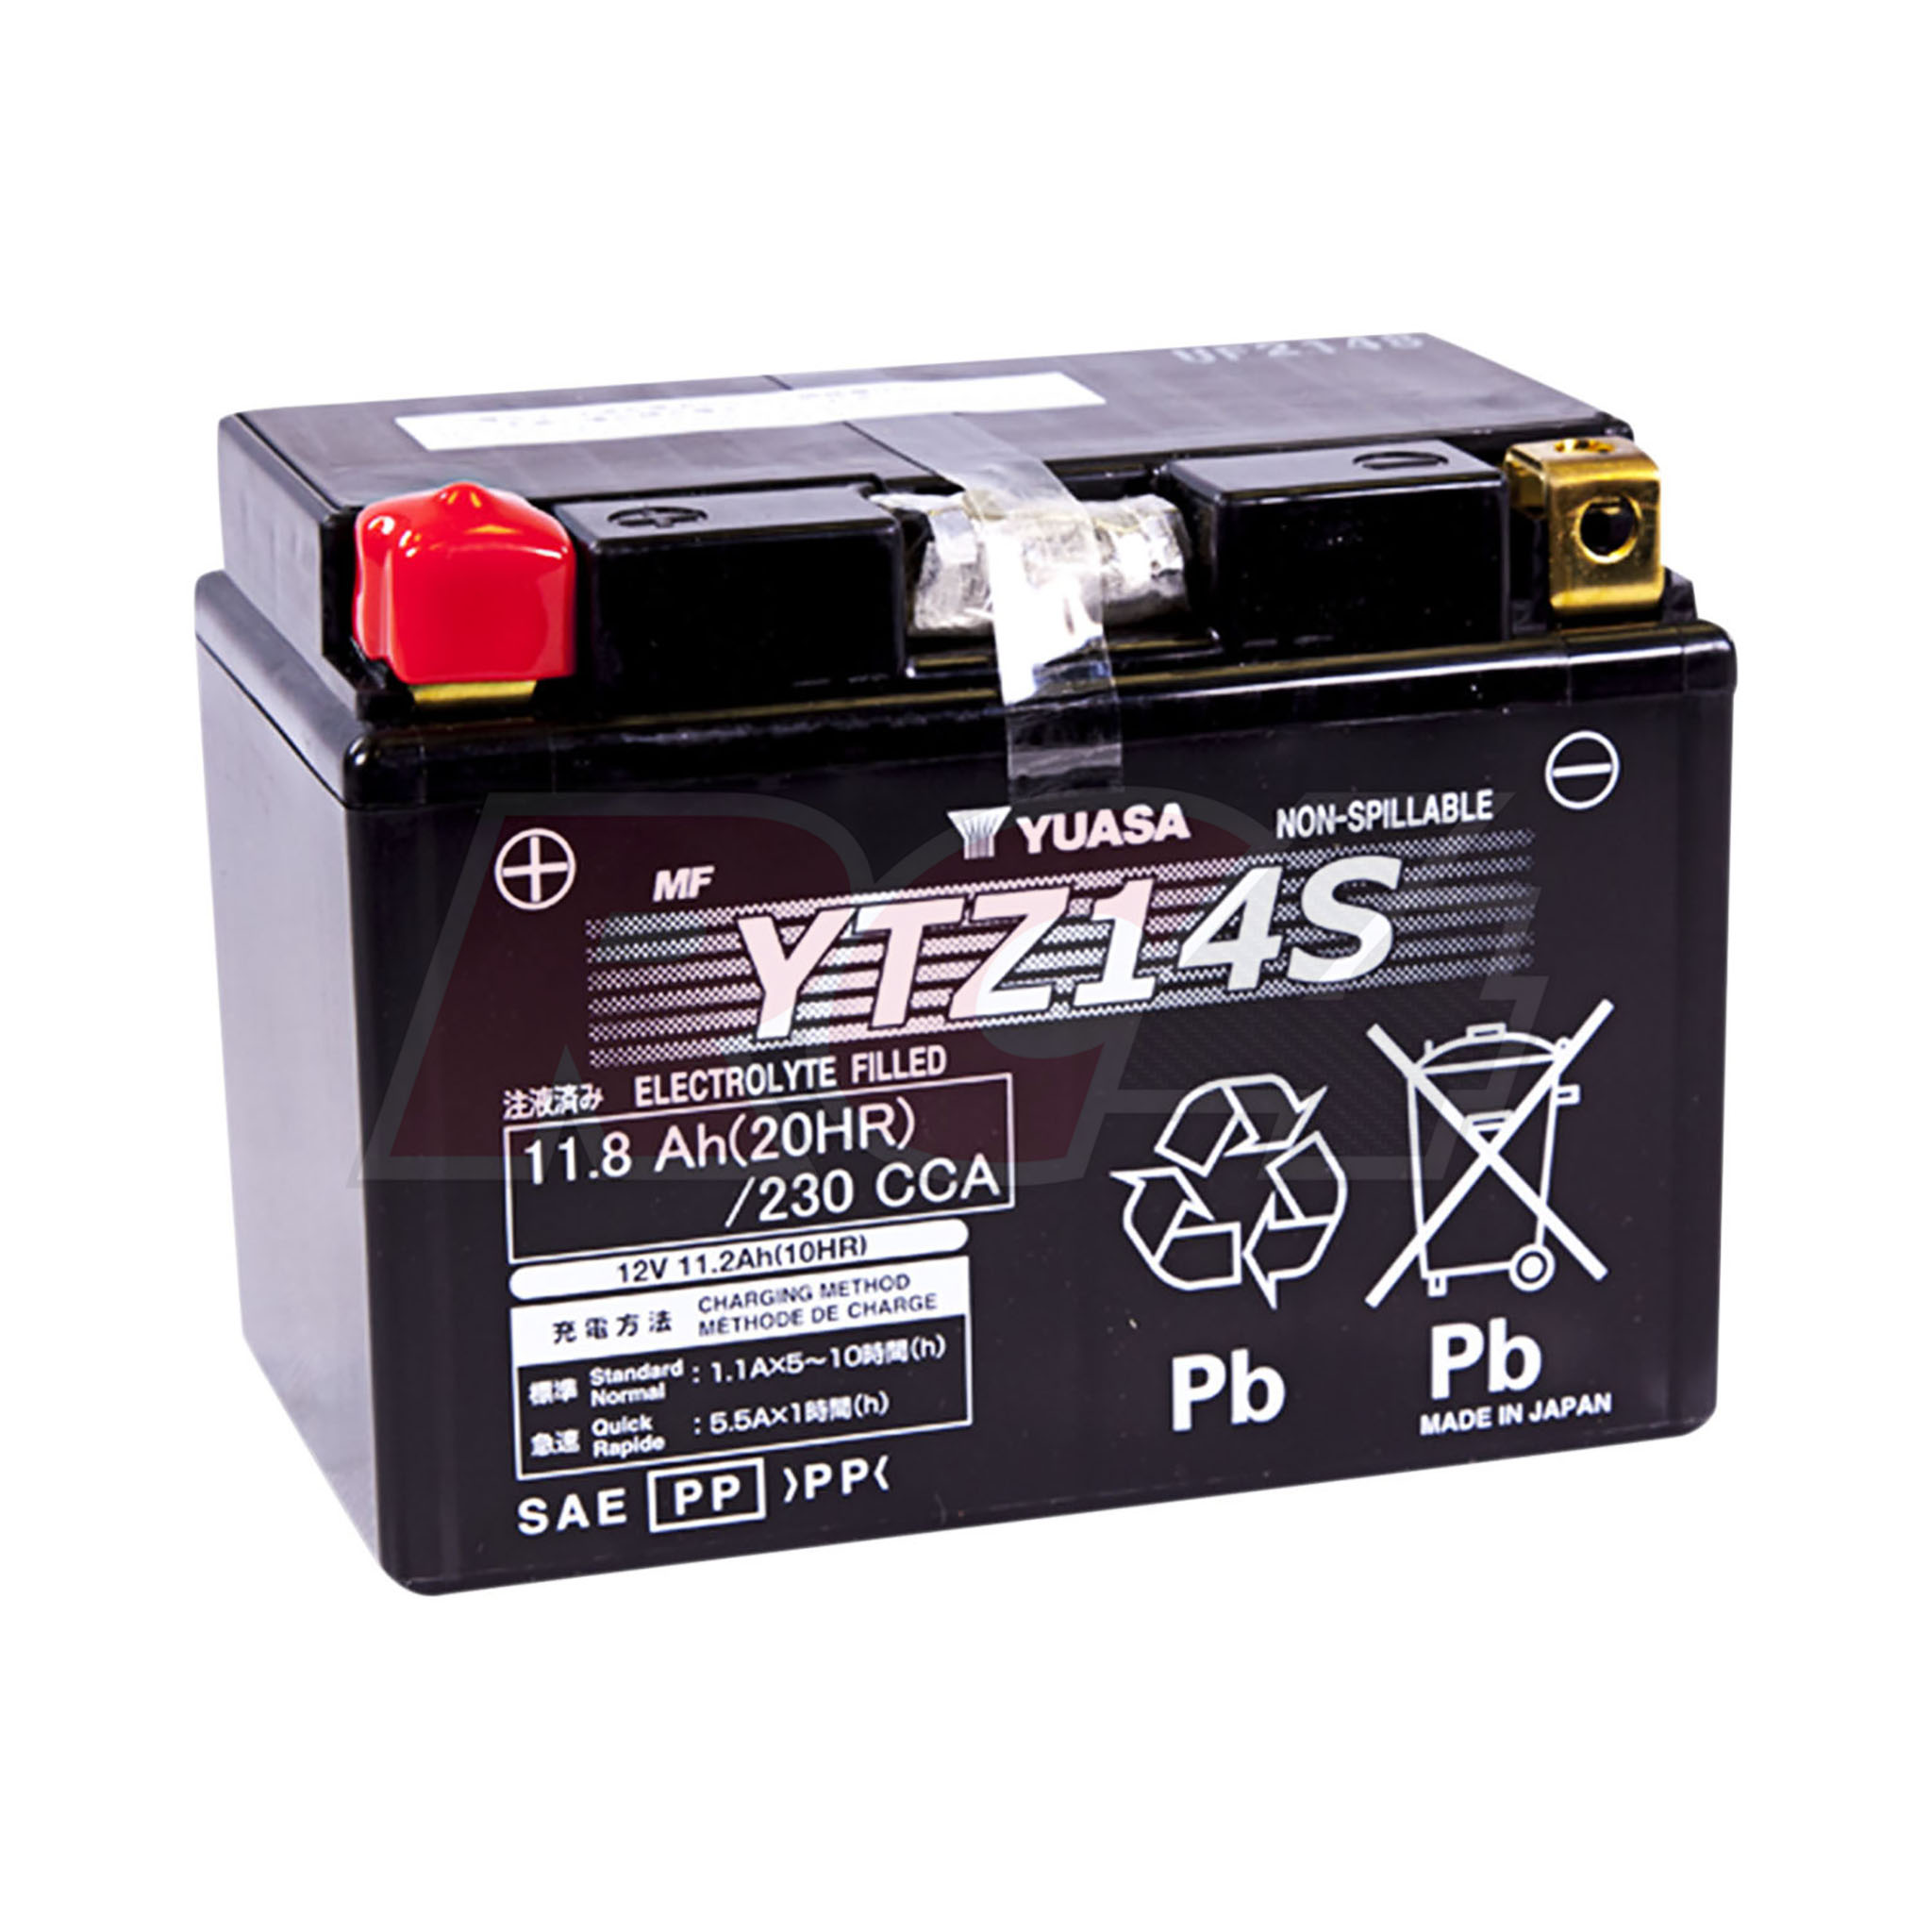 Аккумулятор battery отзывы. Yuasa ytz14s. Аккумулятор Yuasa ytz14s. Ytz12s ytz14s. Ytz14s MF.